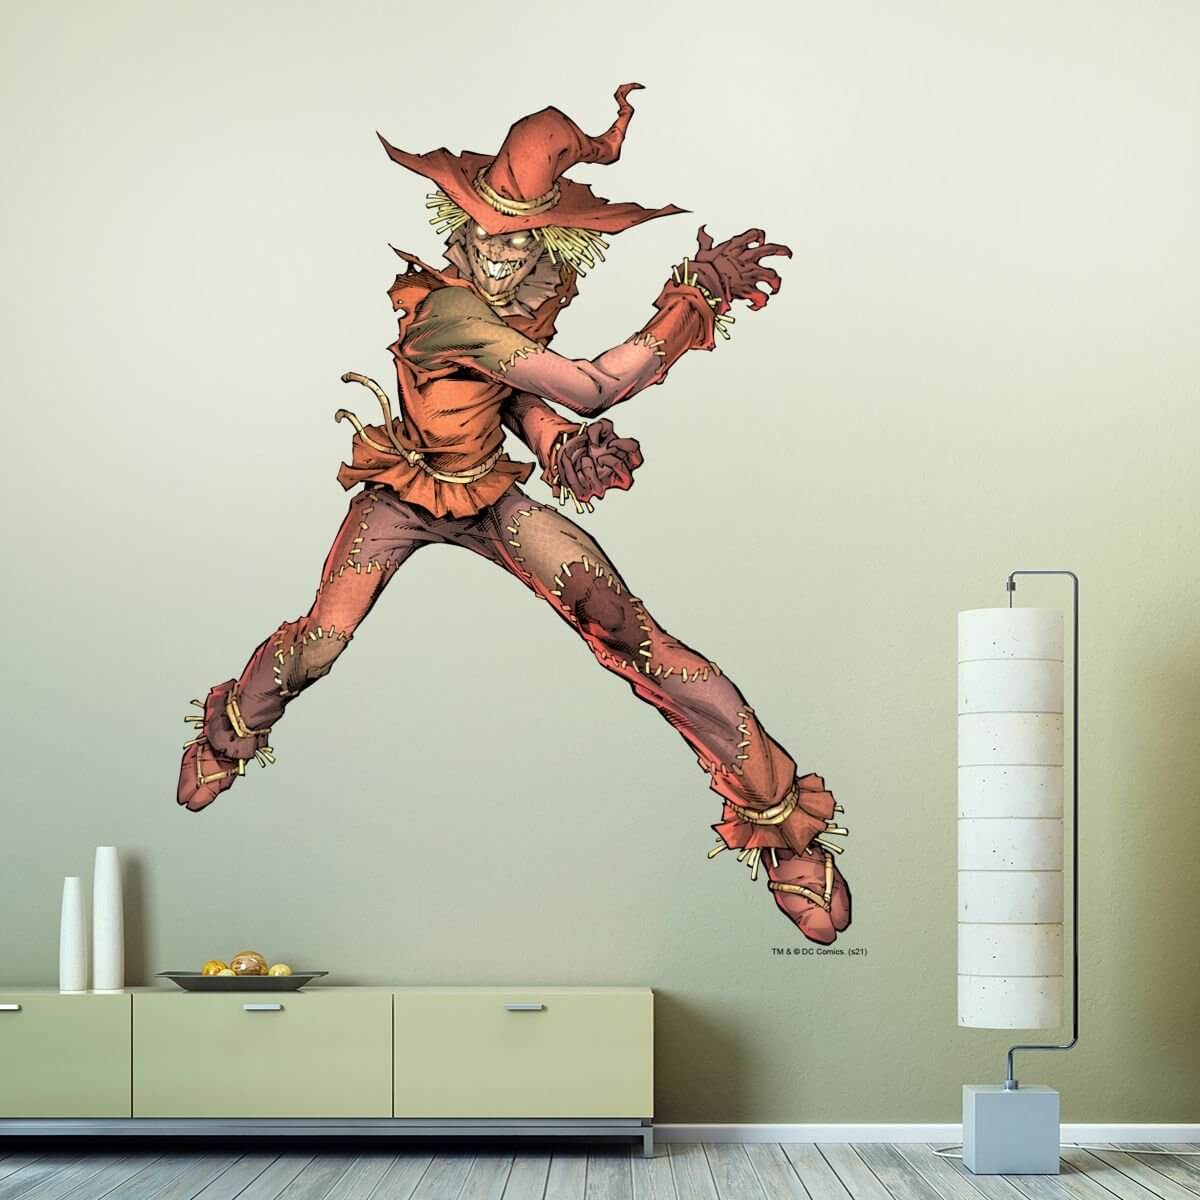 Kismet Decals Scarecrow Violent Dancing Licensed Wall Sticker - Easy DIY Justice League Home & Room Decor Wall Art - Kismet Decals